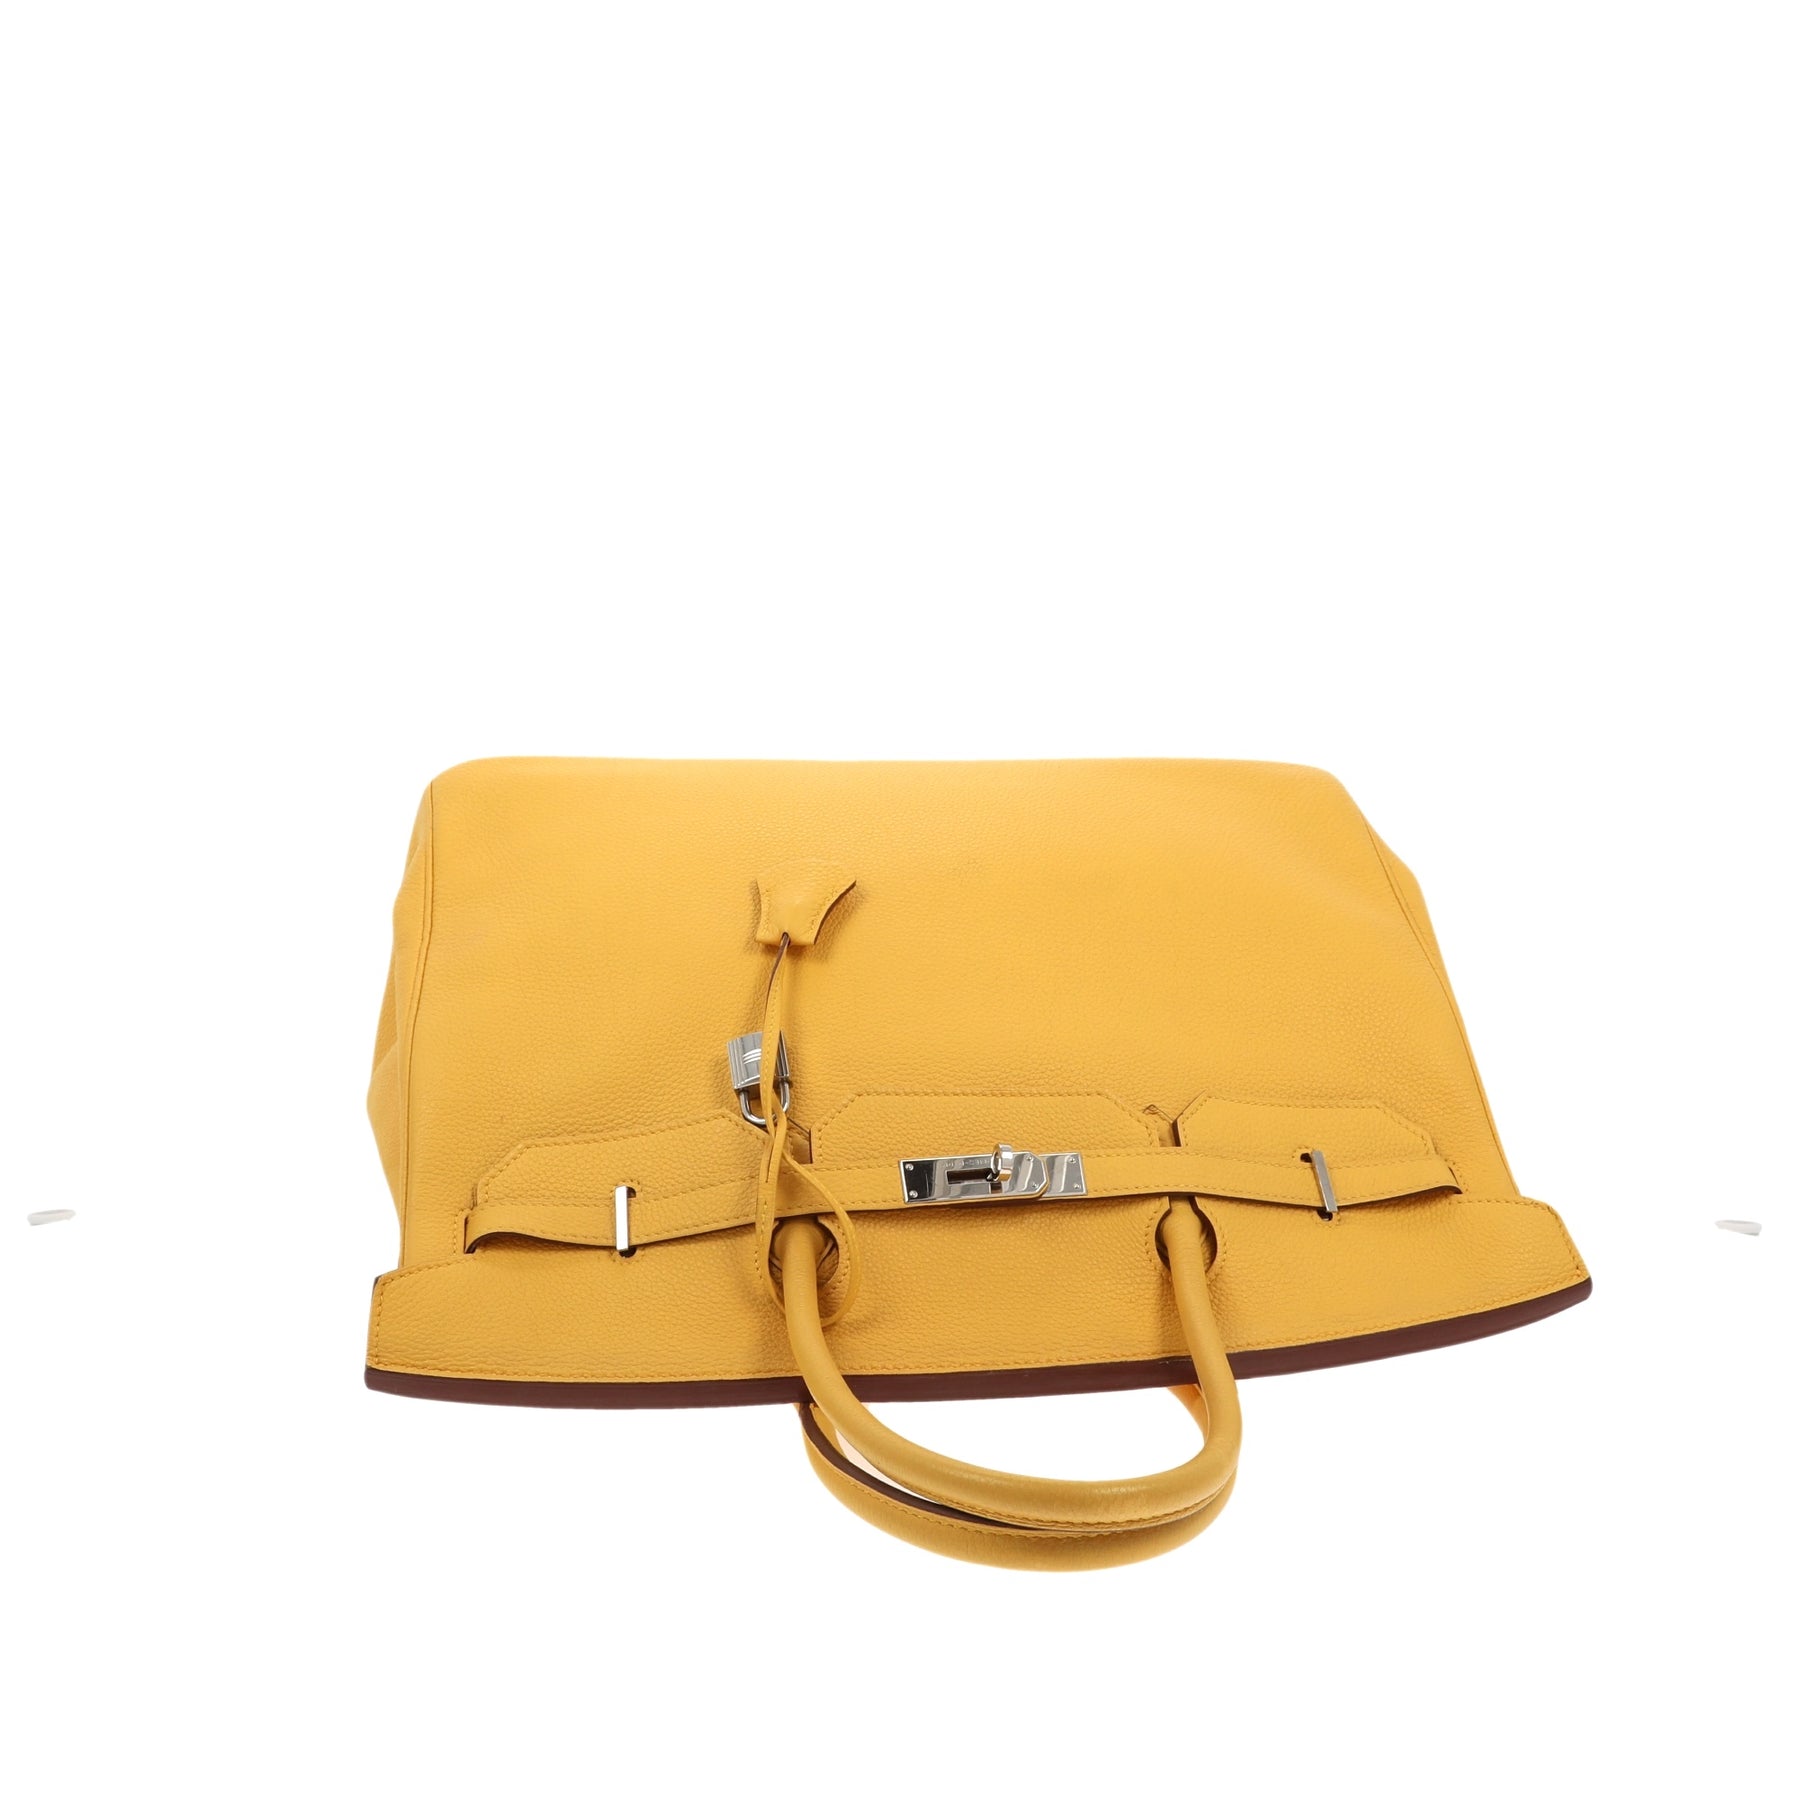 Hermès Birkin 40 cm Handbag in Etoupe Togo Leather